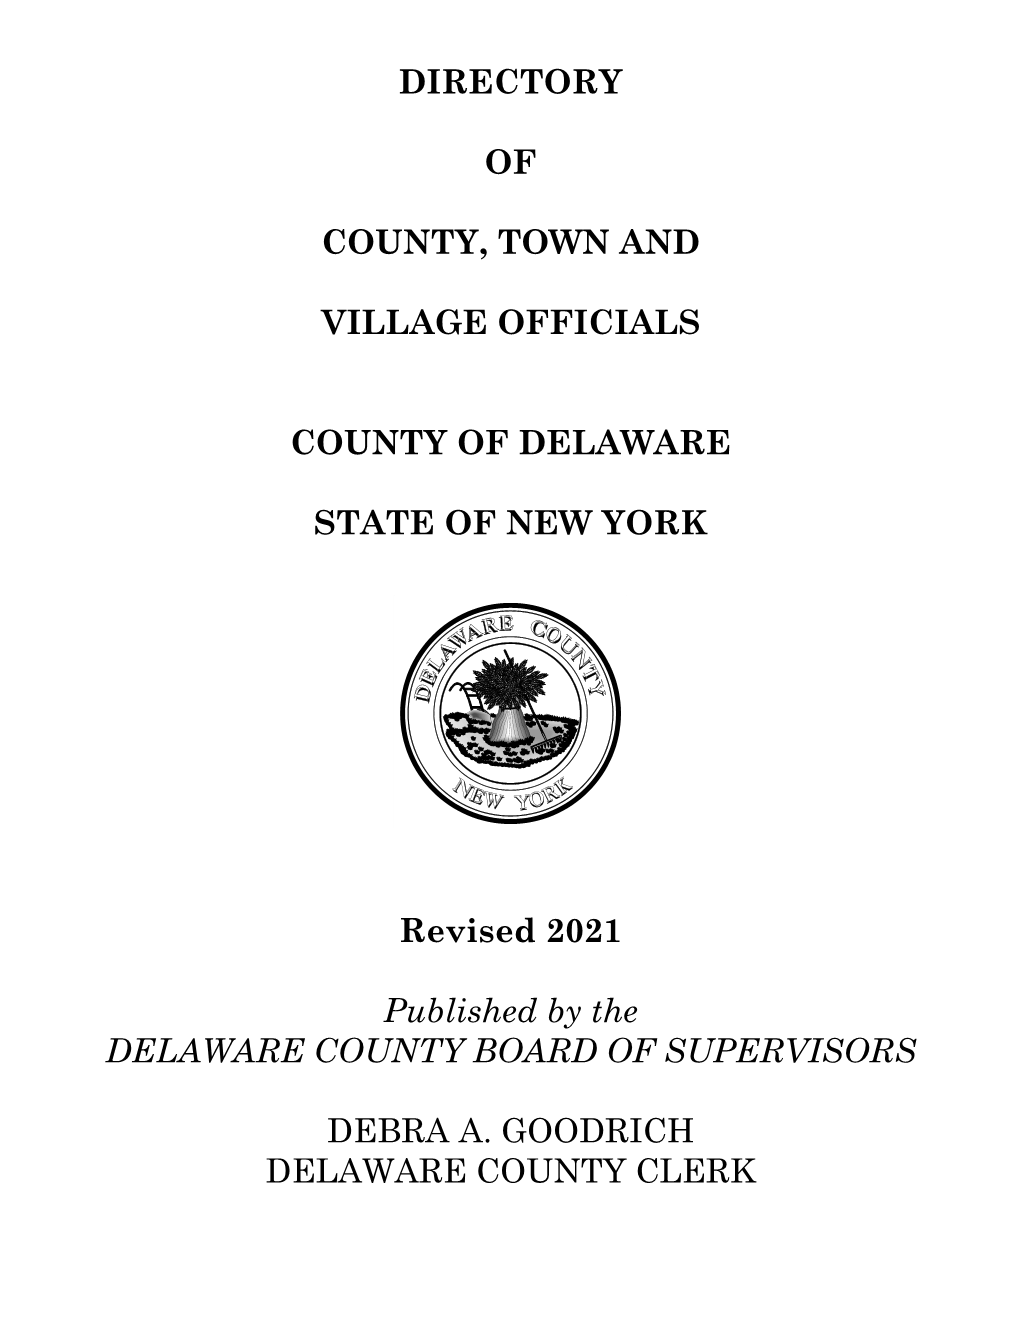 2021 Delaware County Directory